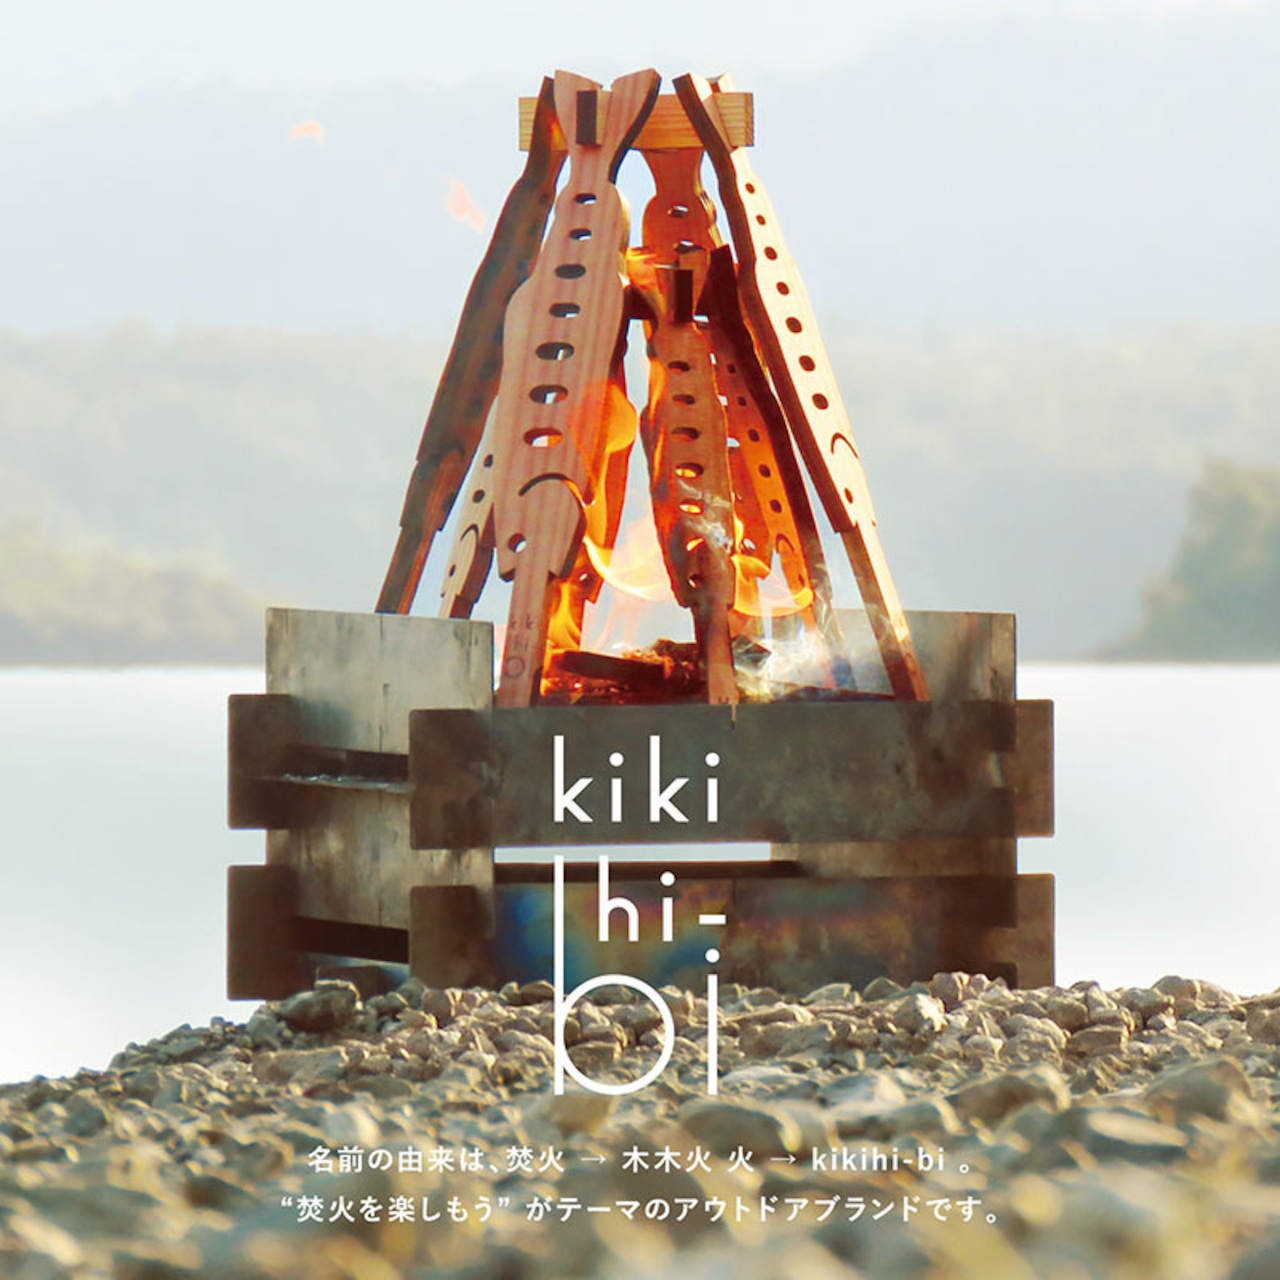 kikihi-bi kikihibi キキヒビ onsen set 温泉 セット ナップサック と 手ぬぐいの温泉セット